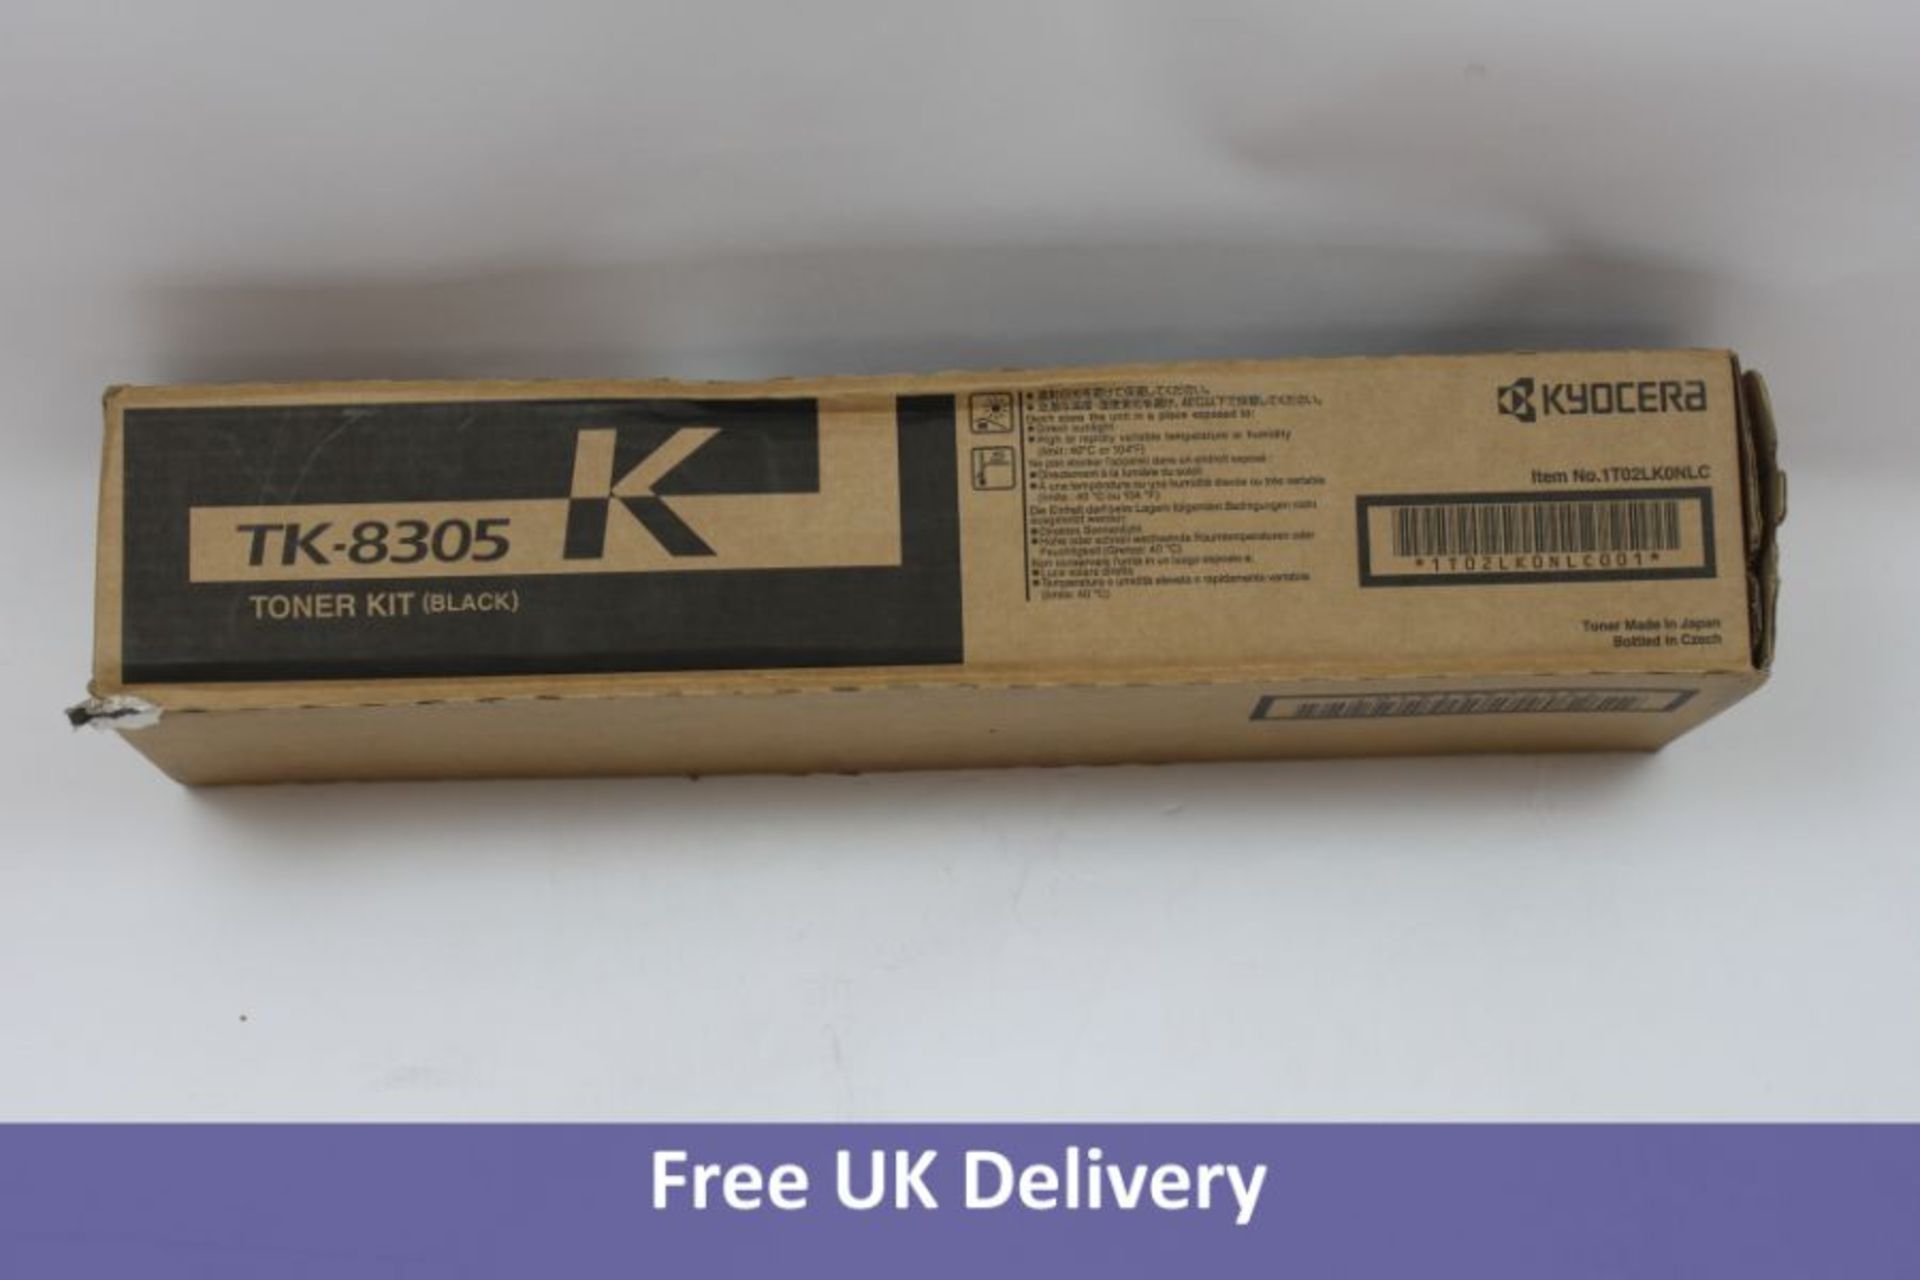 Kyocera TK-8305 Toner Kit, Black